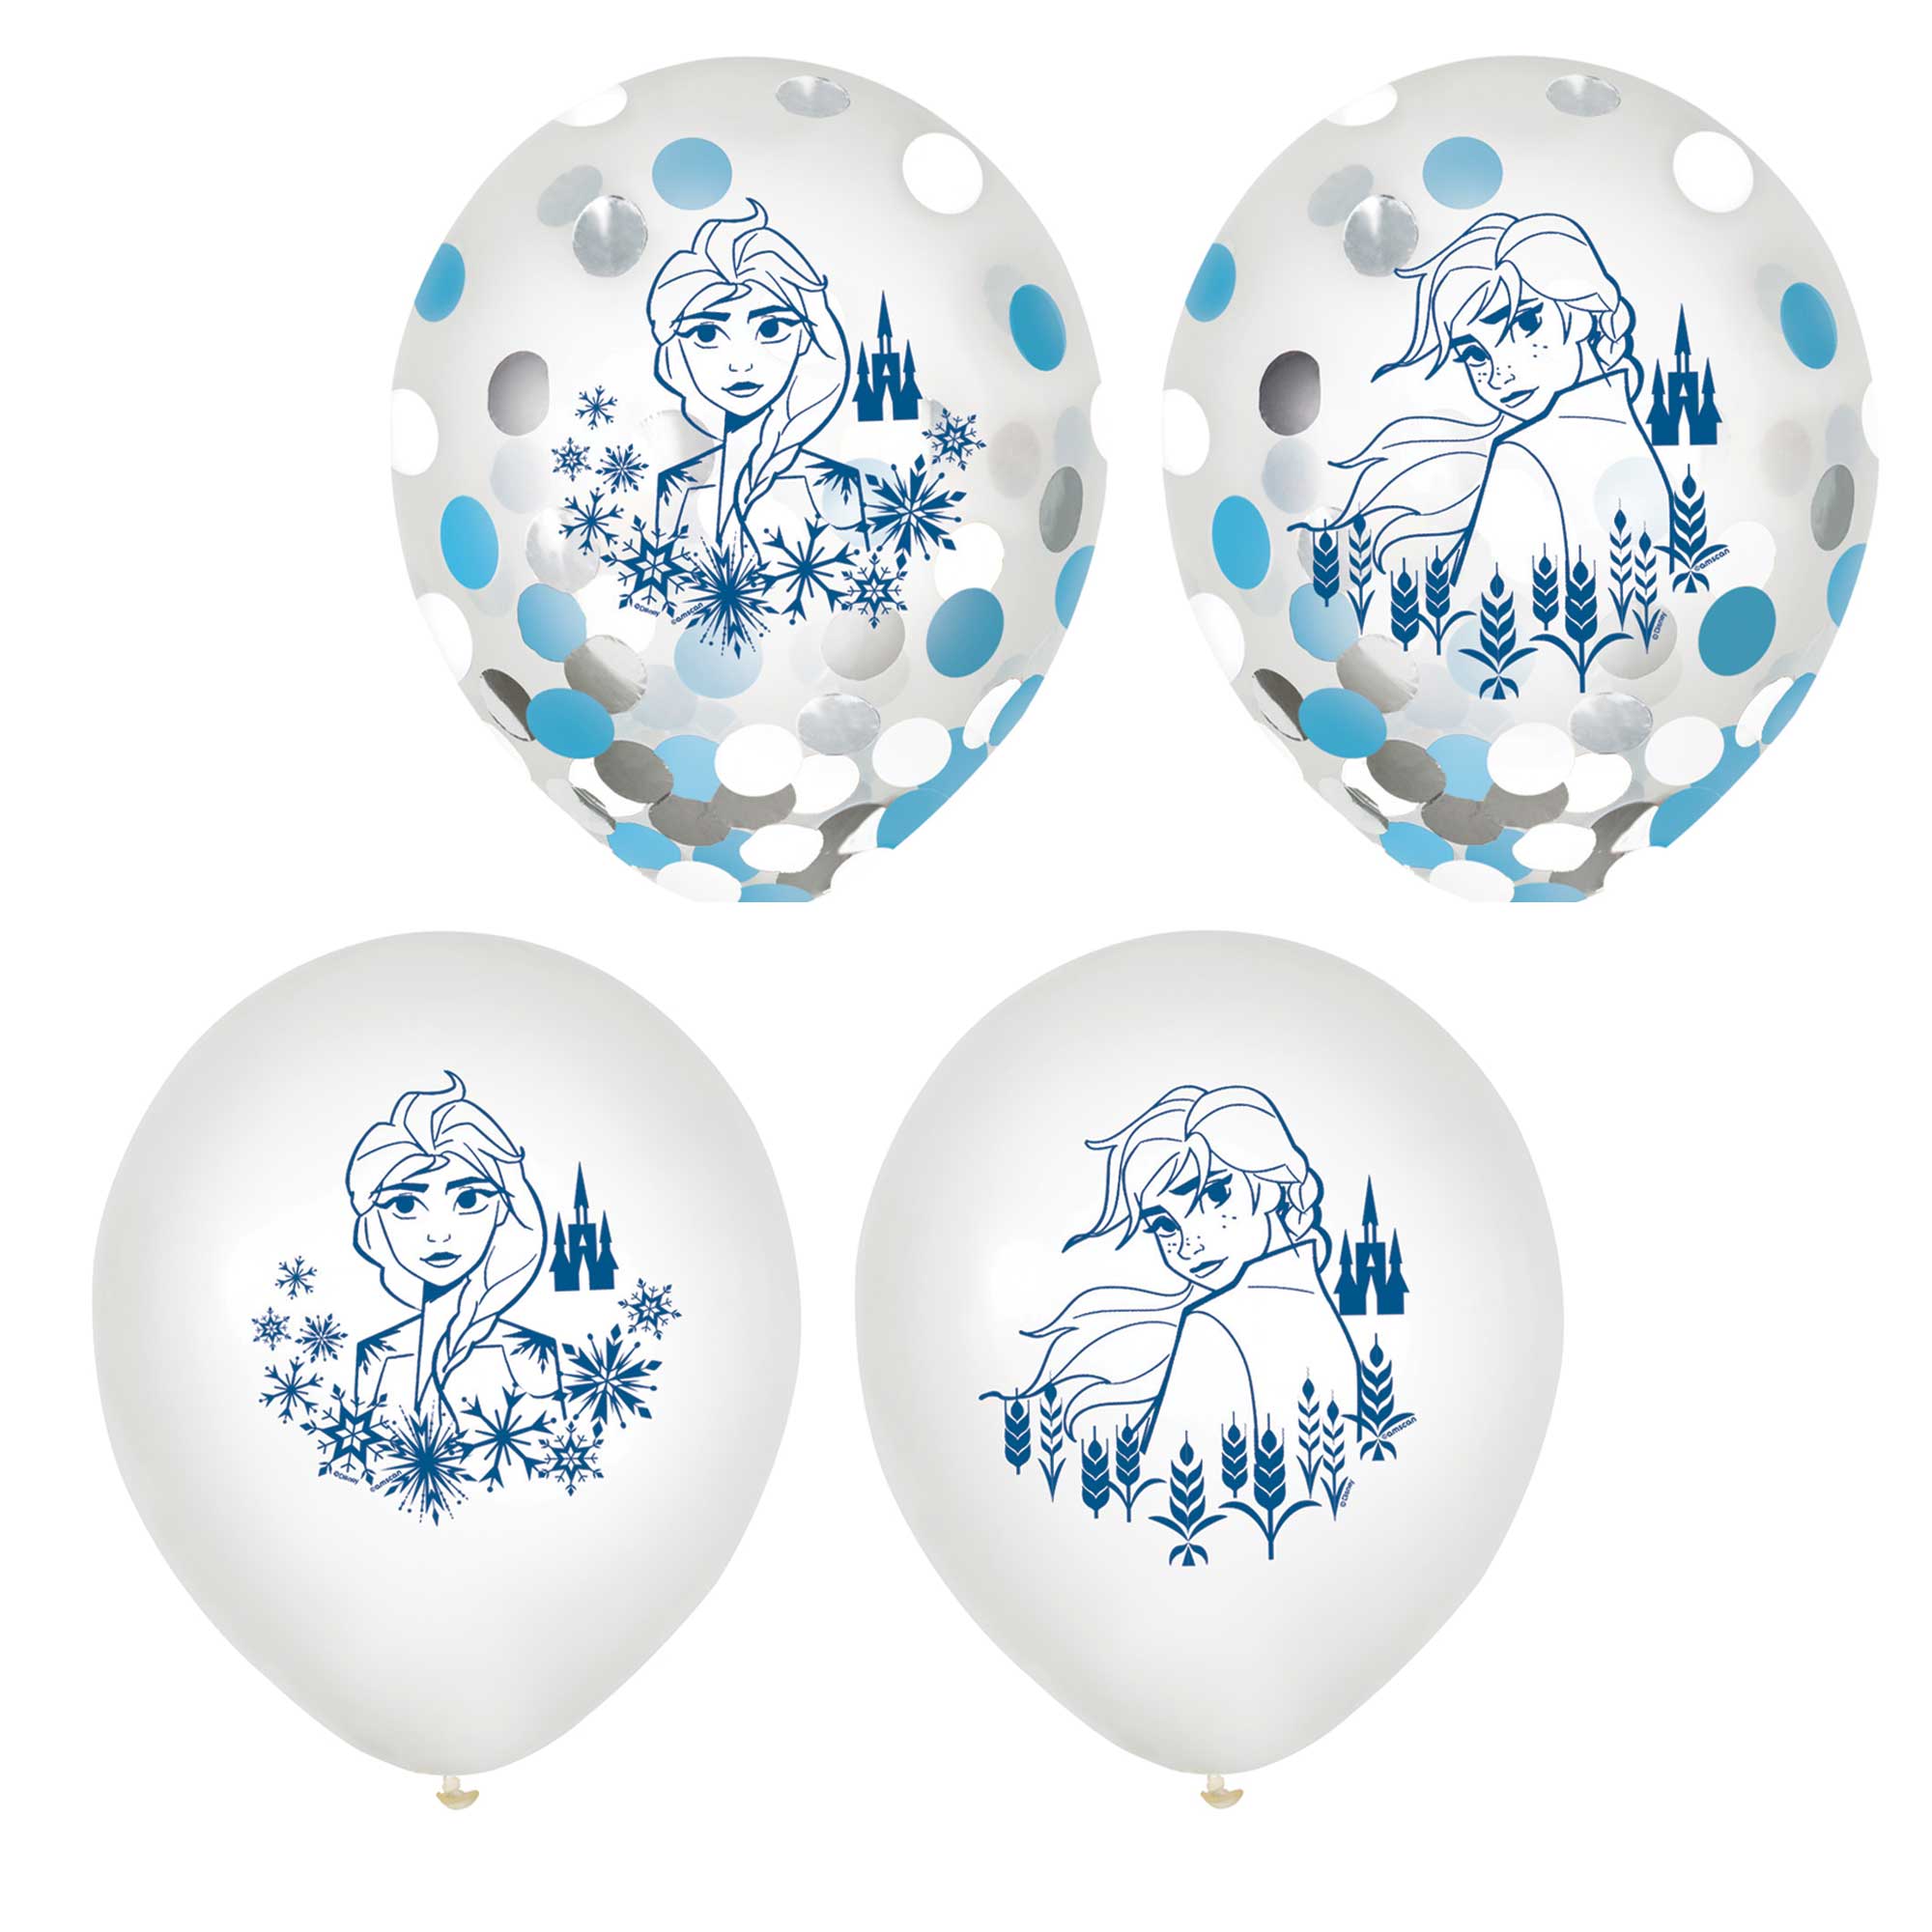 Frozen 2 Confetti Filled Latex Balloons - 30cm 6 Pack Default Title